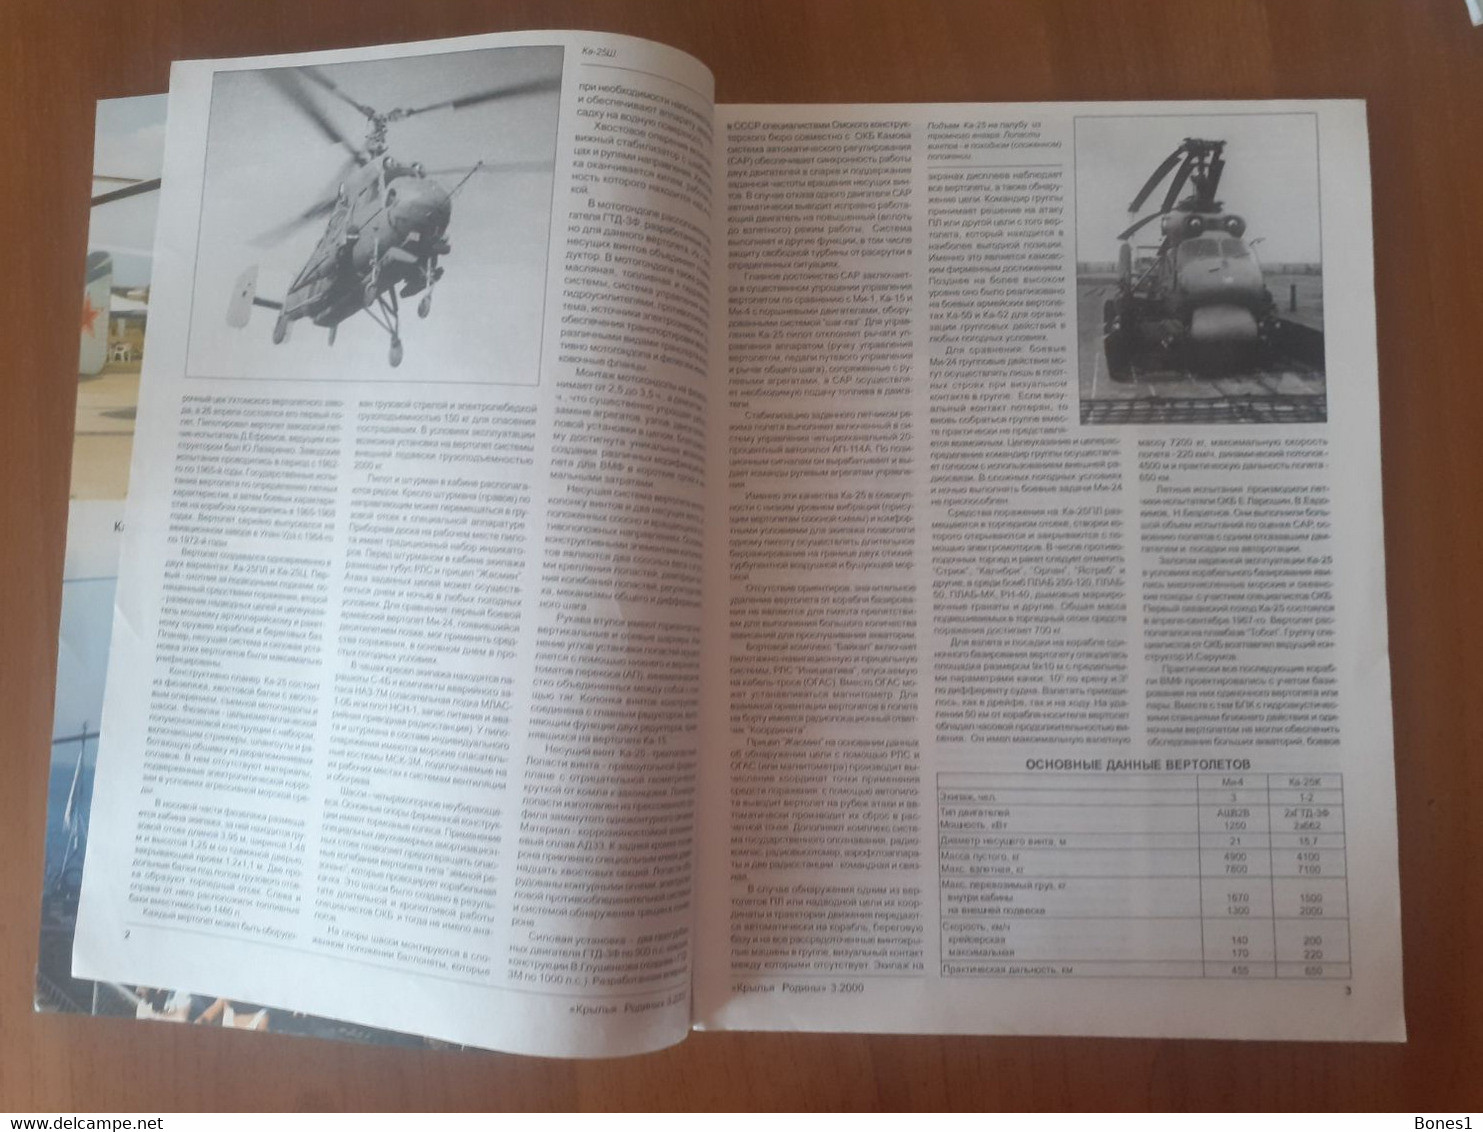 Russia Aviation Magazine 2000 - Luftfahrt